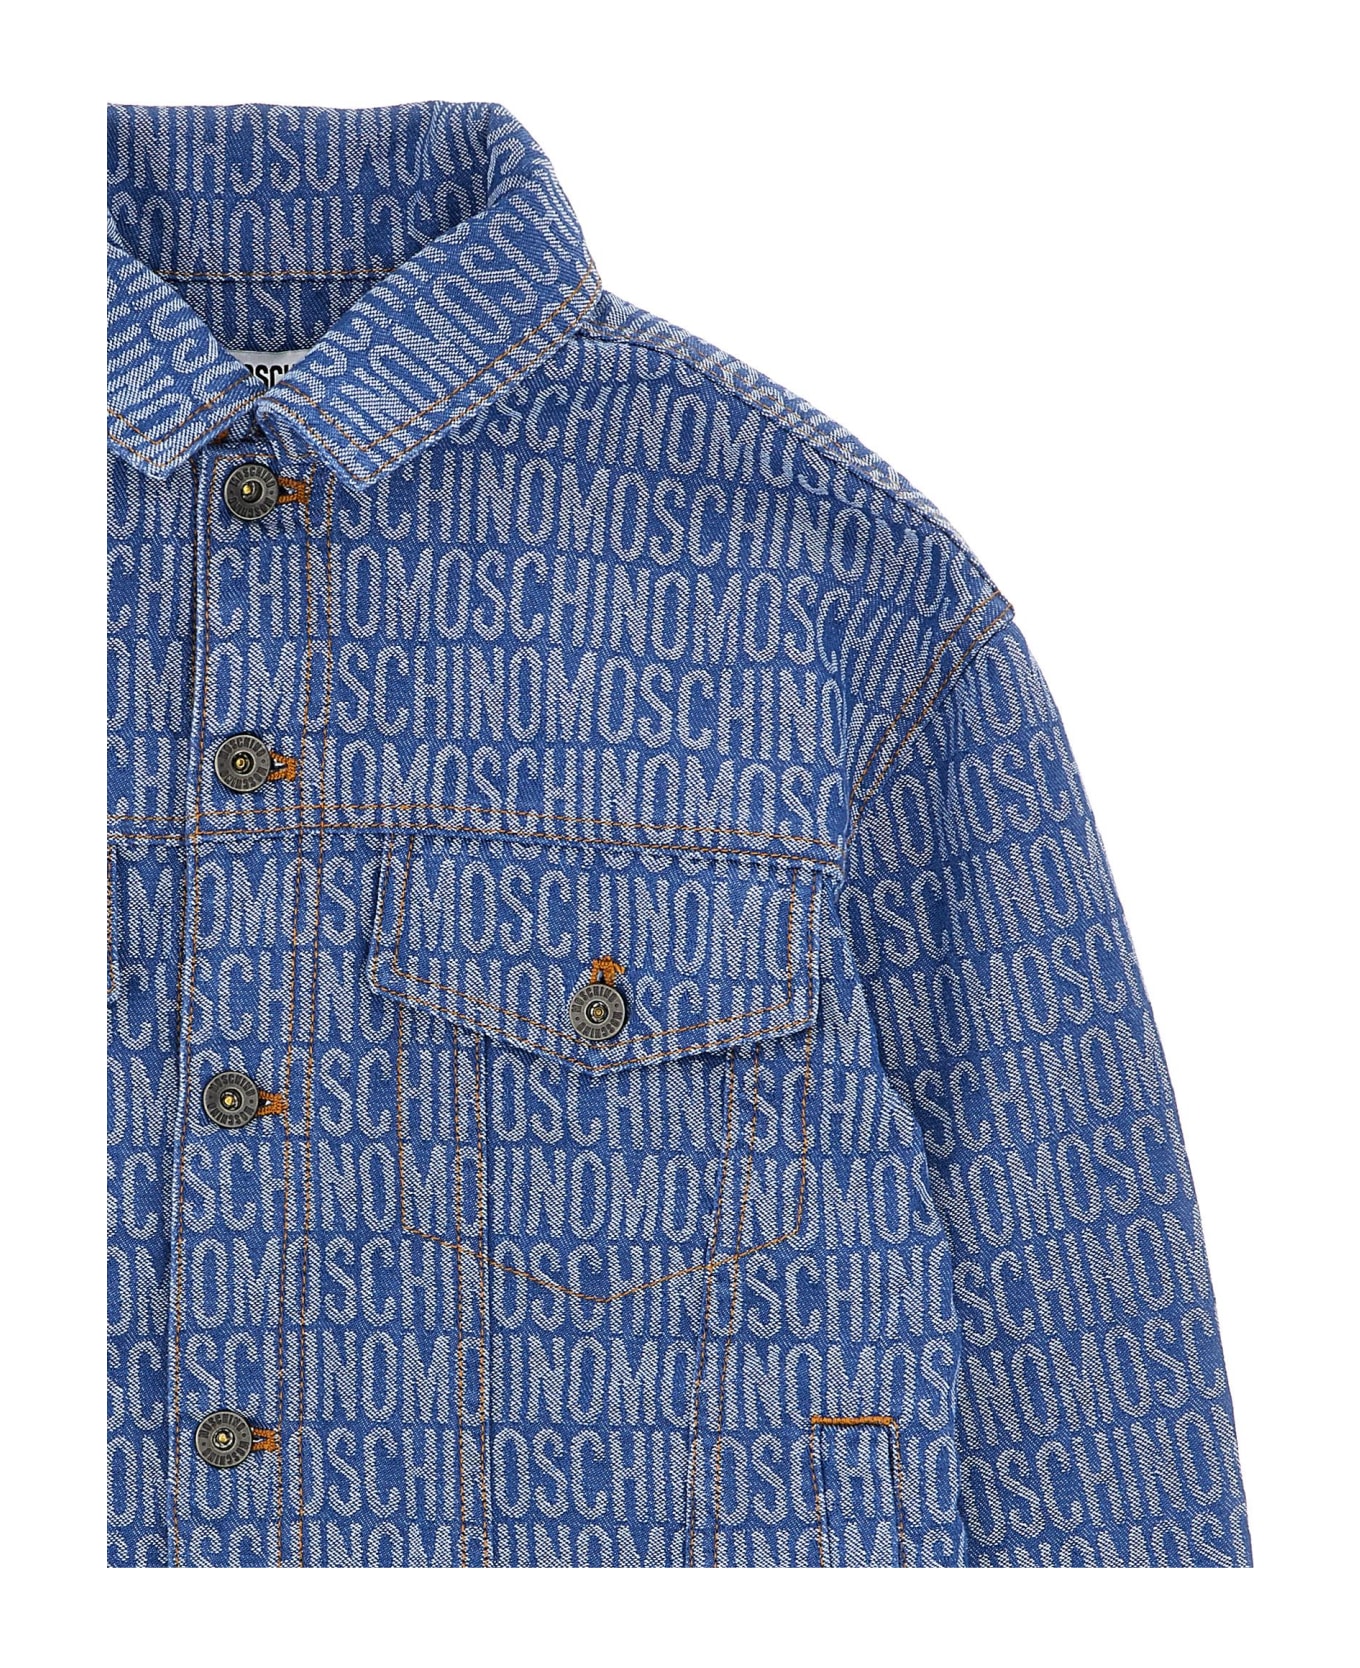 Moschino 'logo' Denim Jacket - Blue